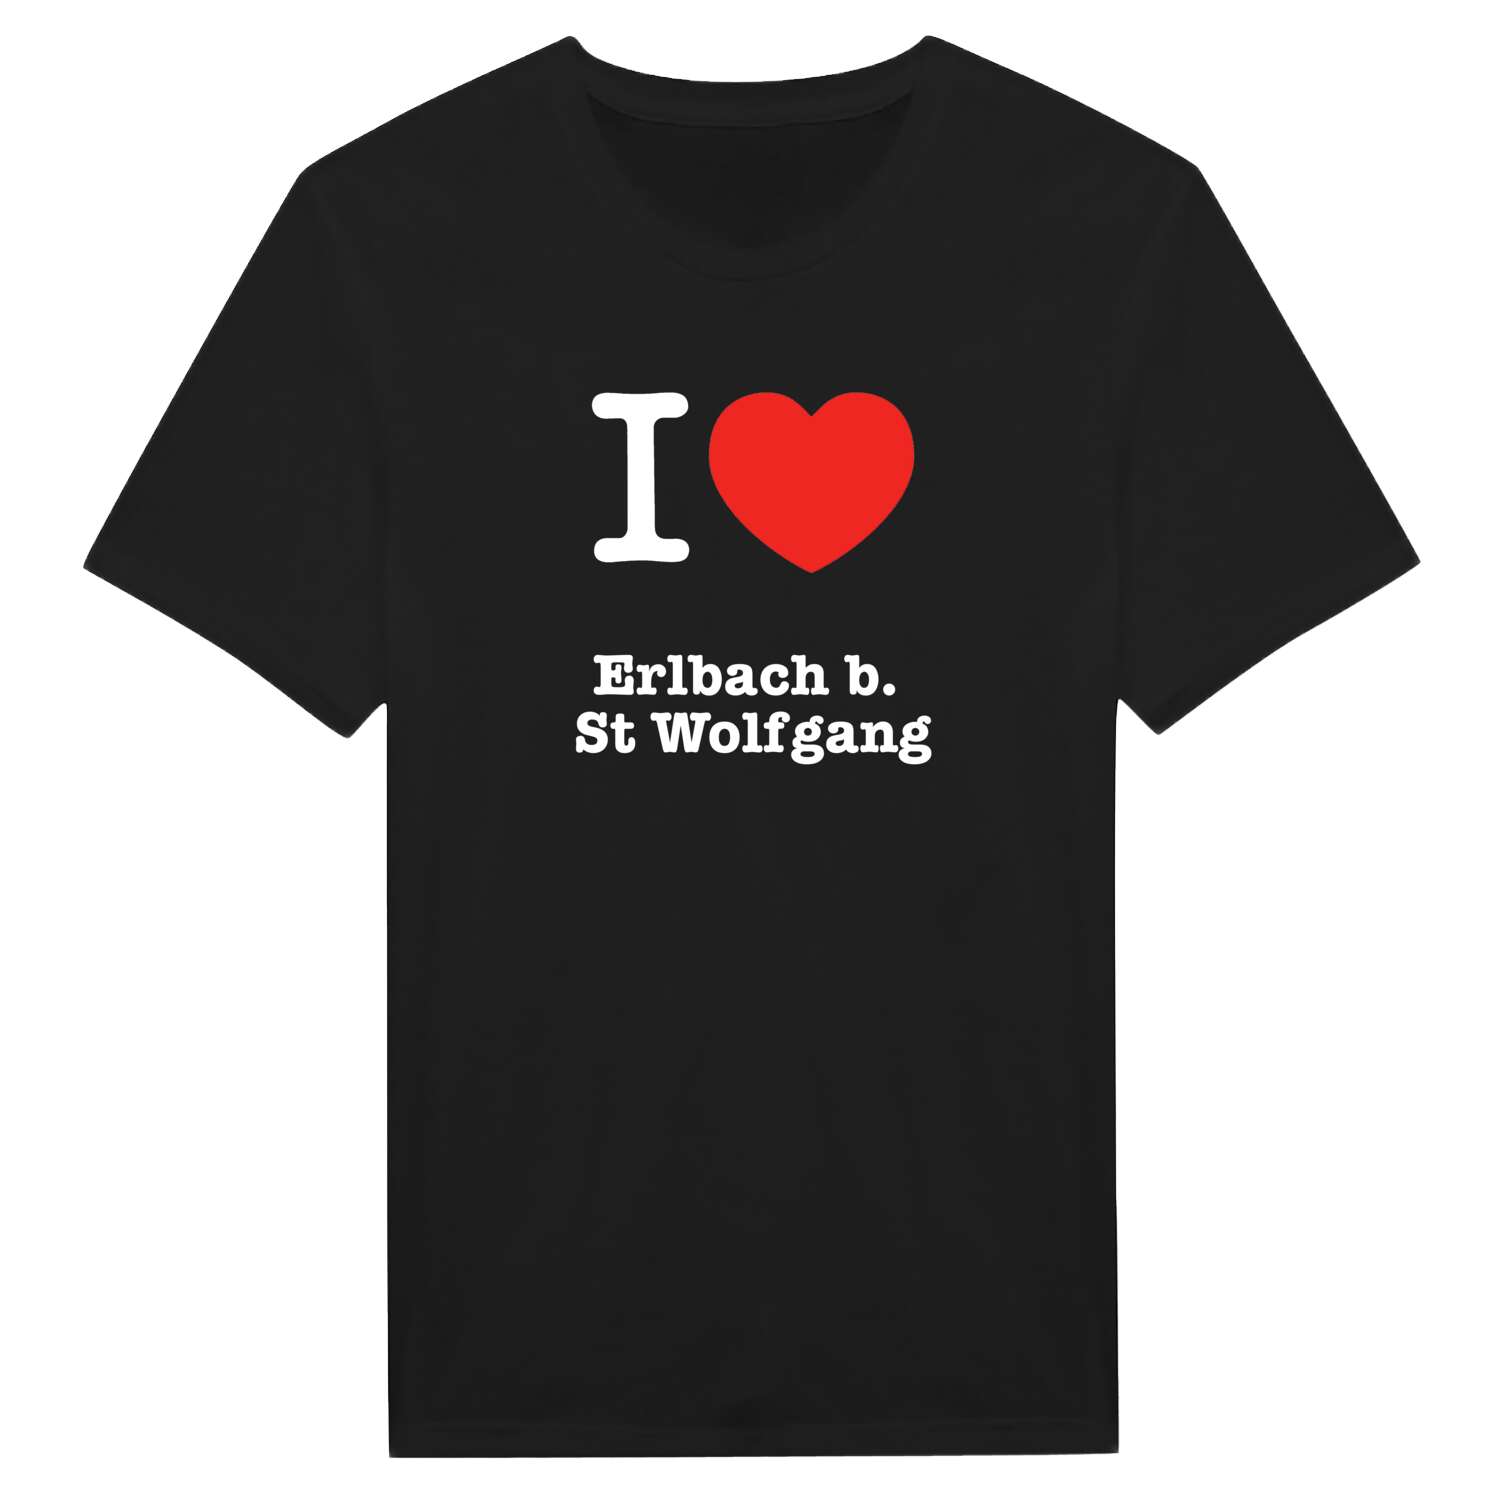 Erlbach b. St Wolfgang T-Shirt »I love«